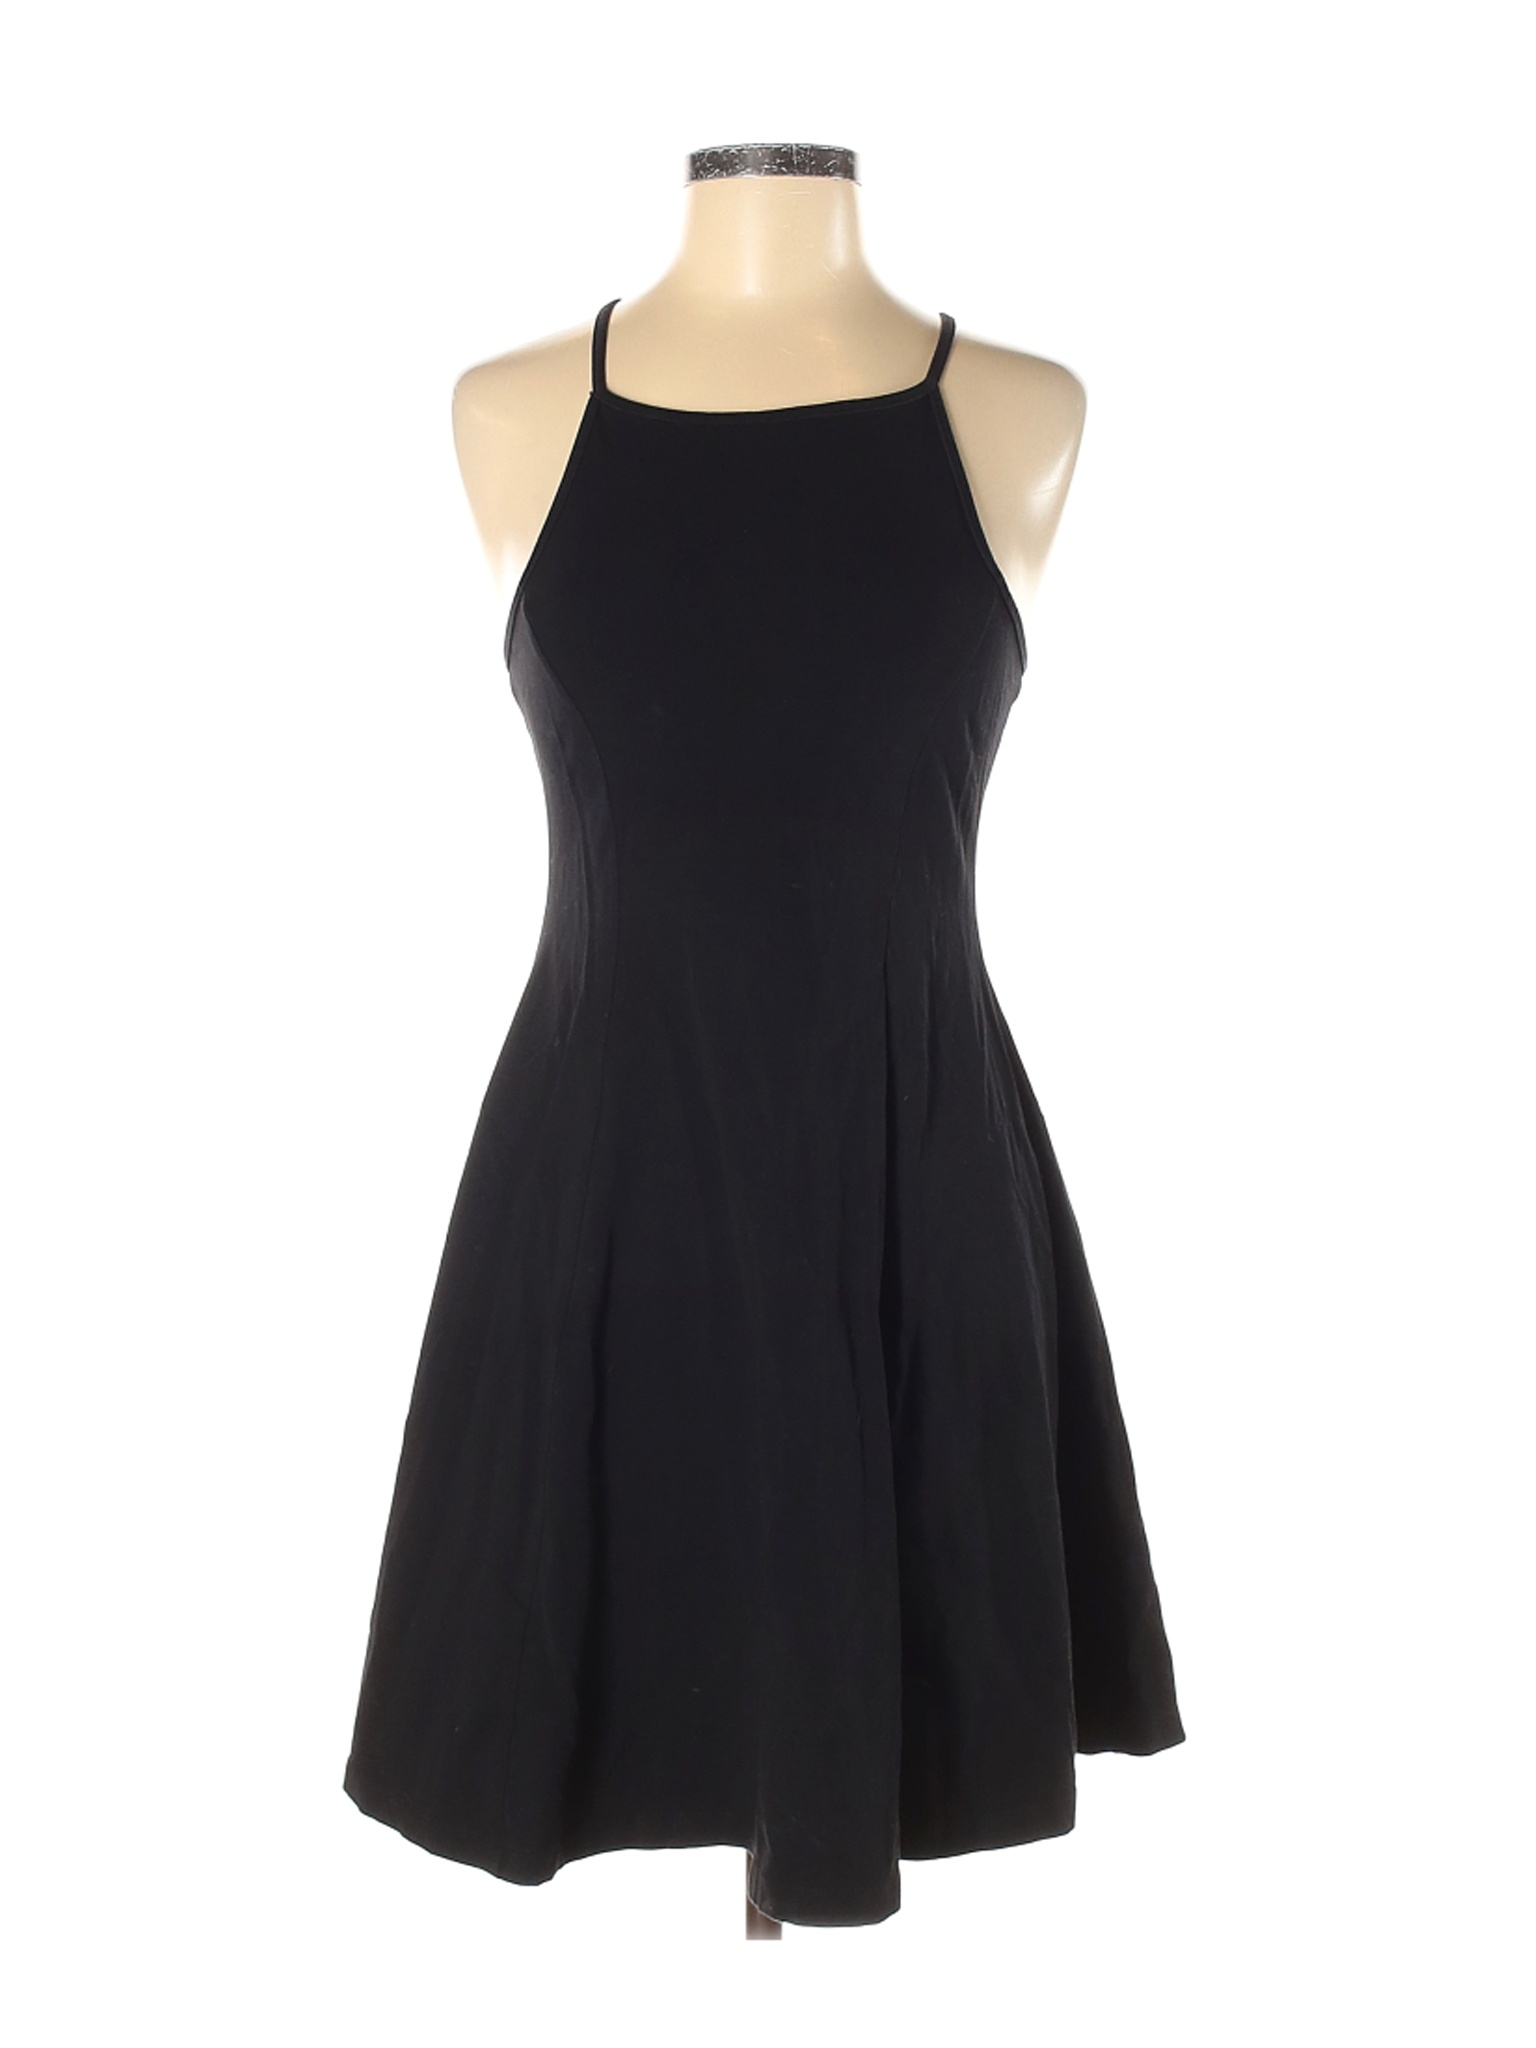 ASOS Women Black Casual Dress 8 | eBay